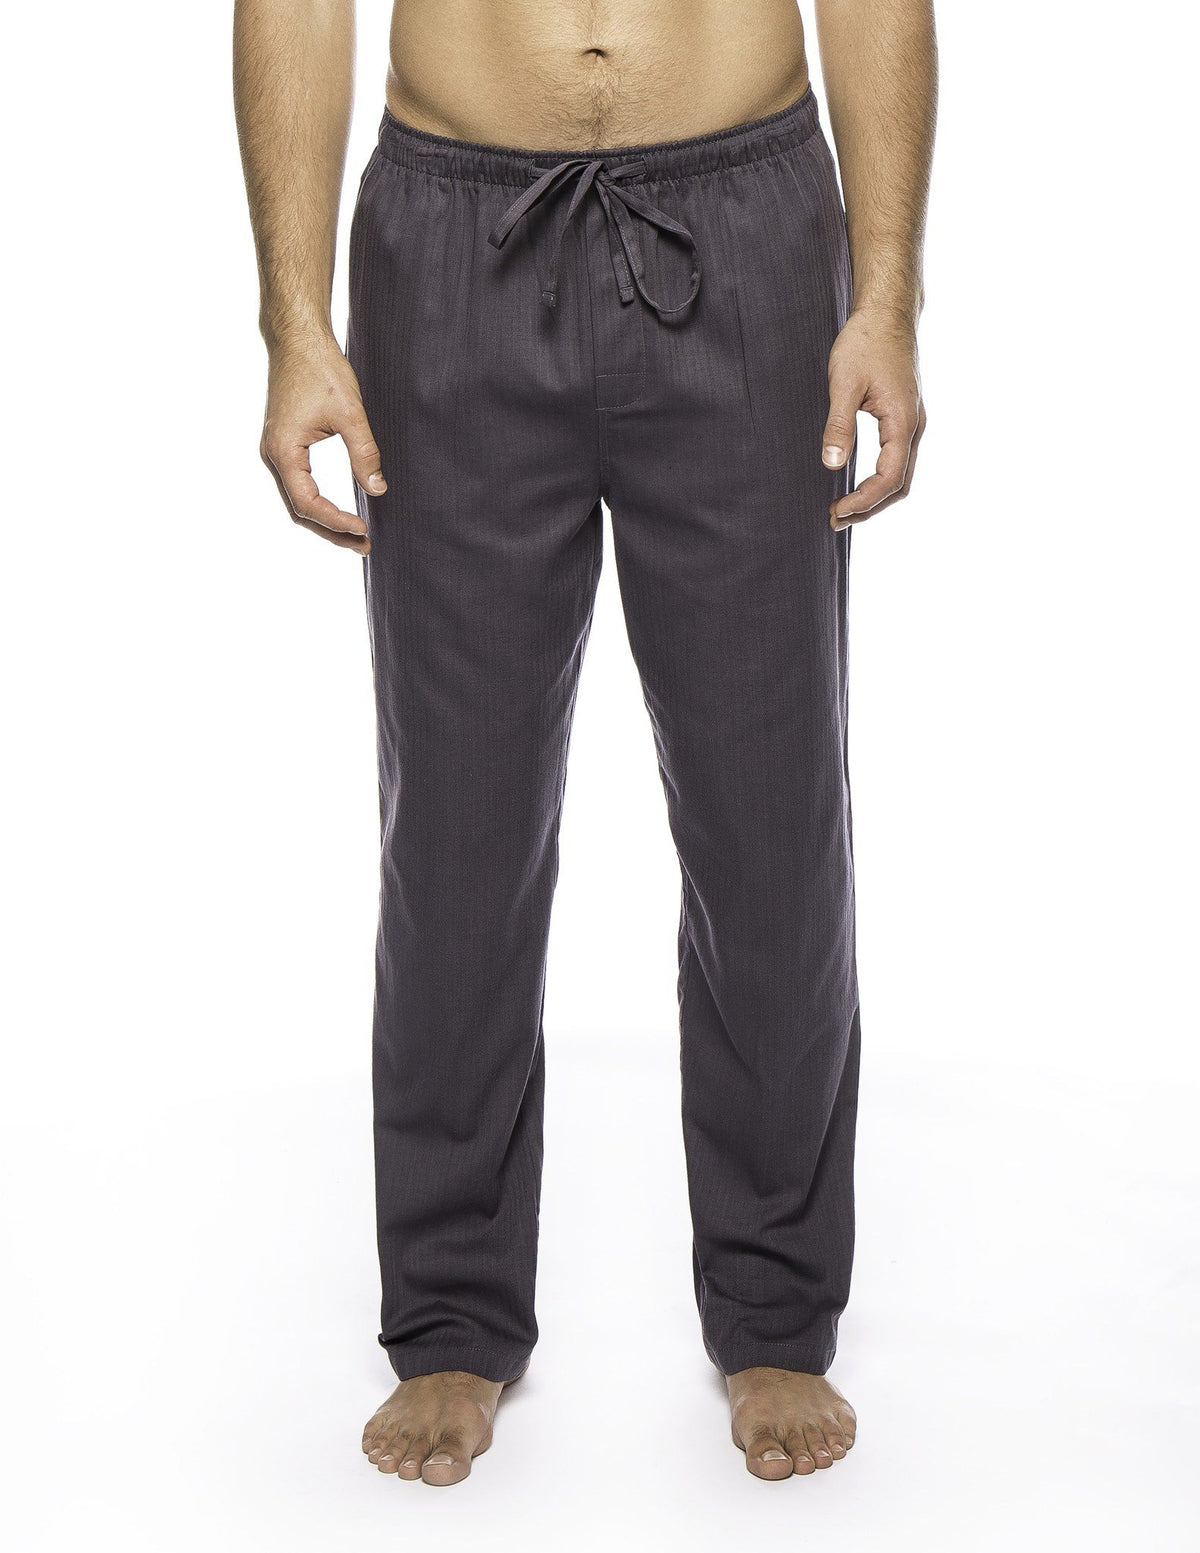 Men's 100% Woven Cotton Lounge Pants - Herringbone Dark Grey